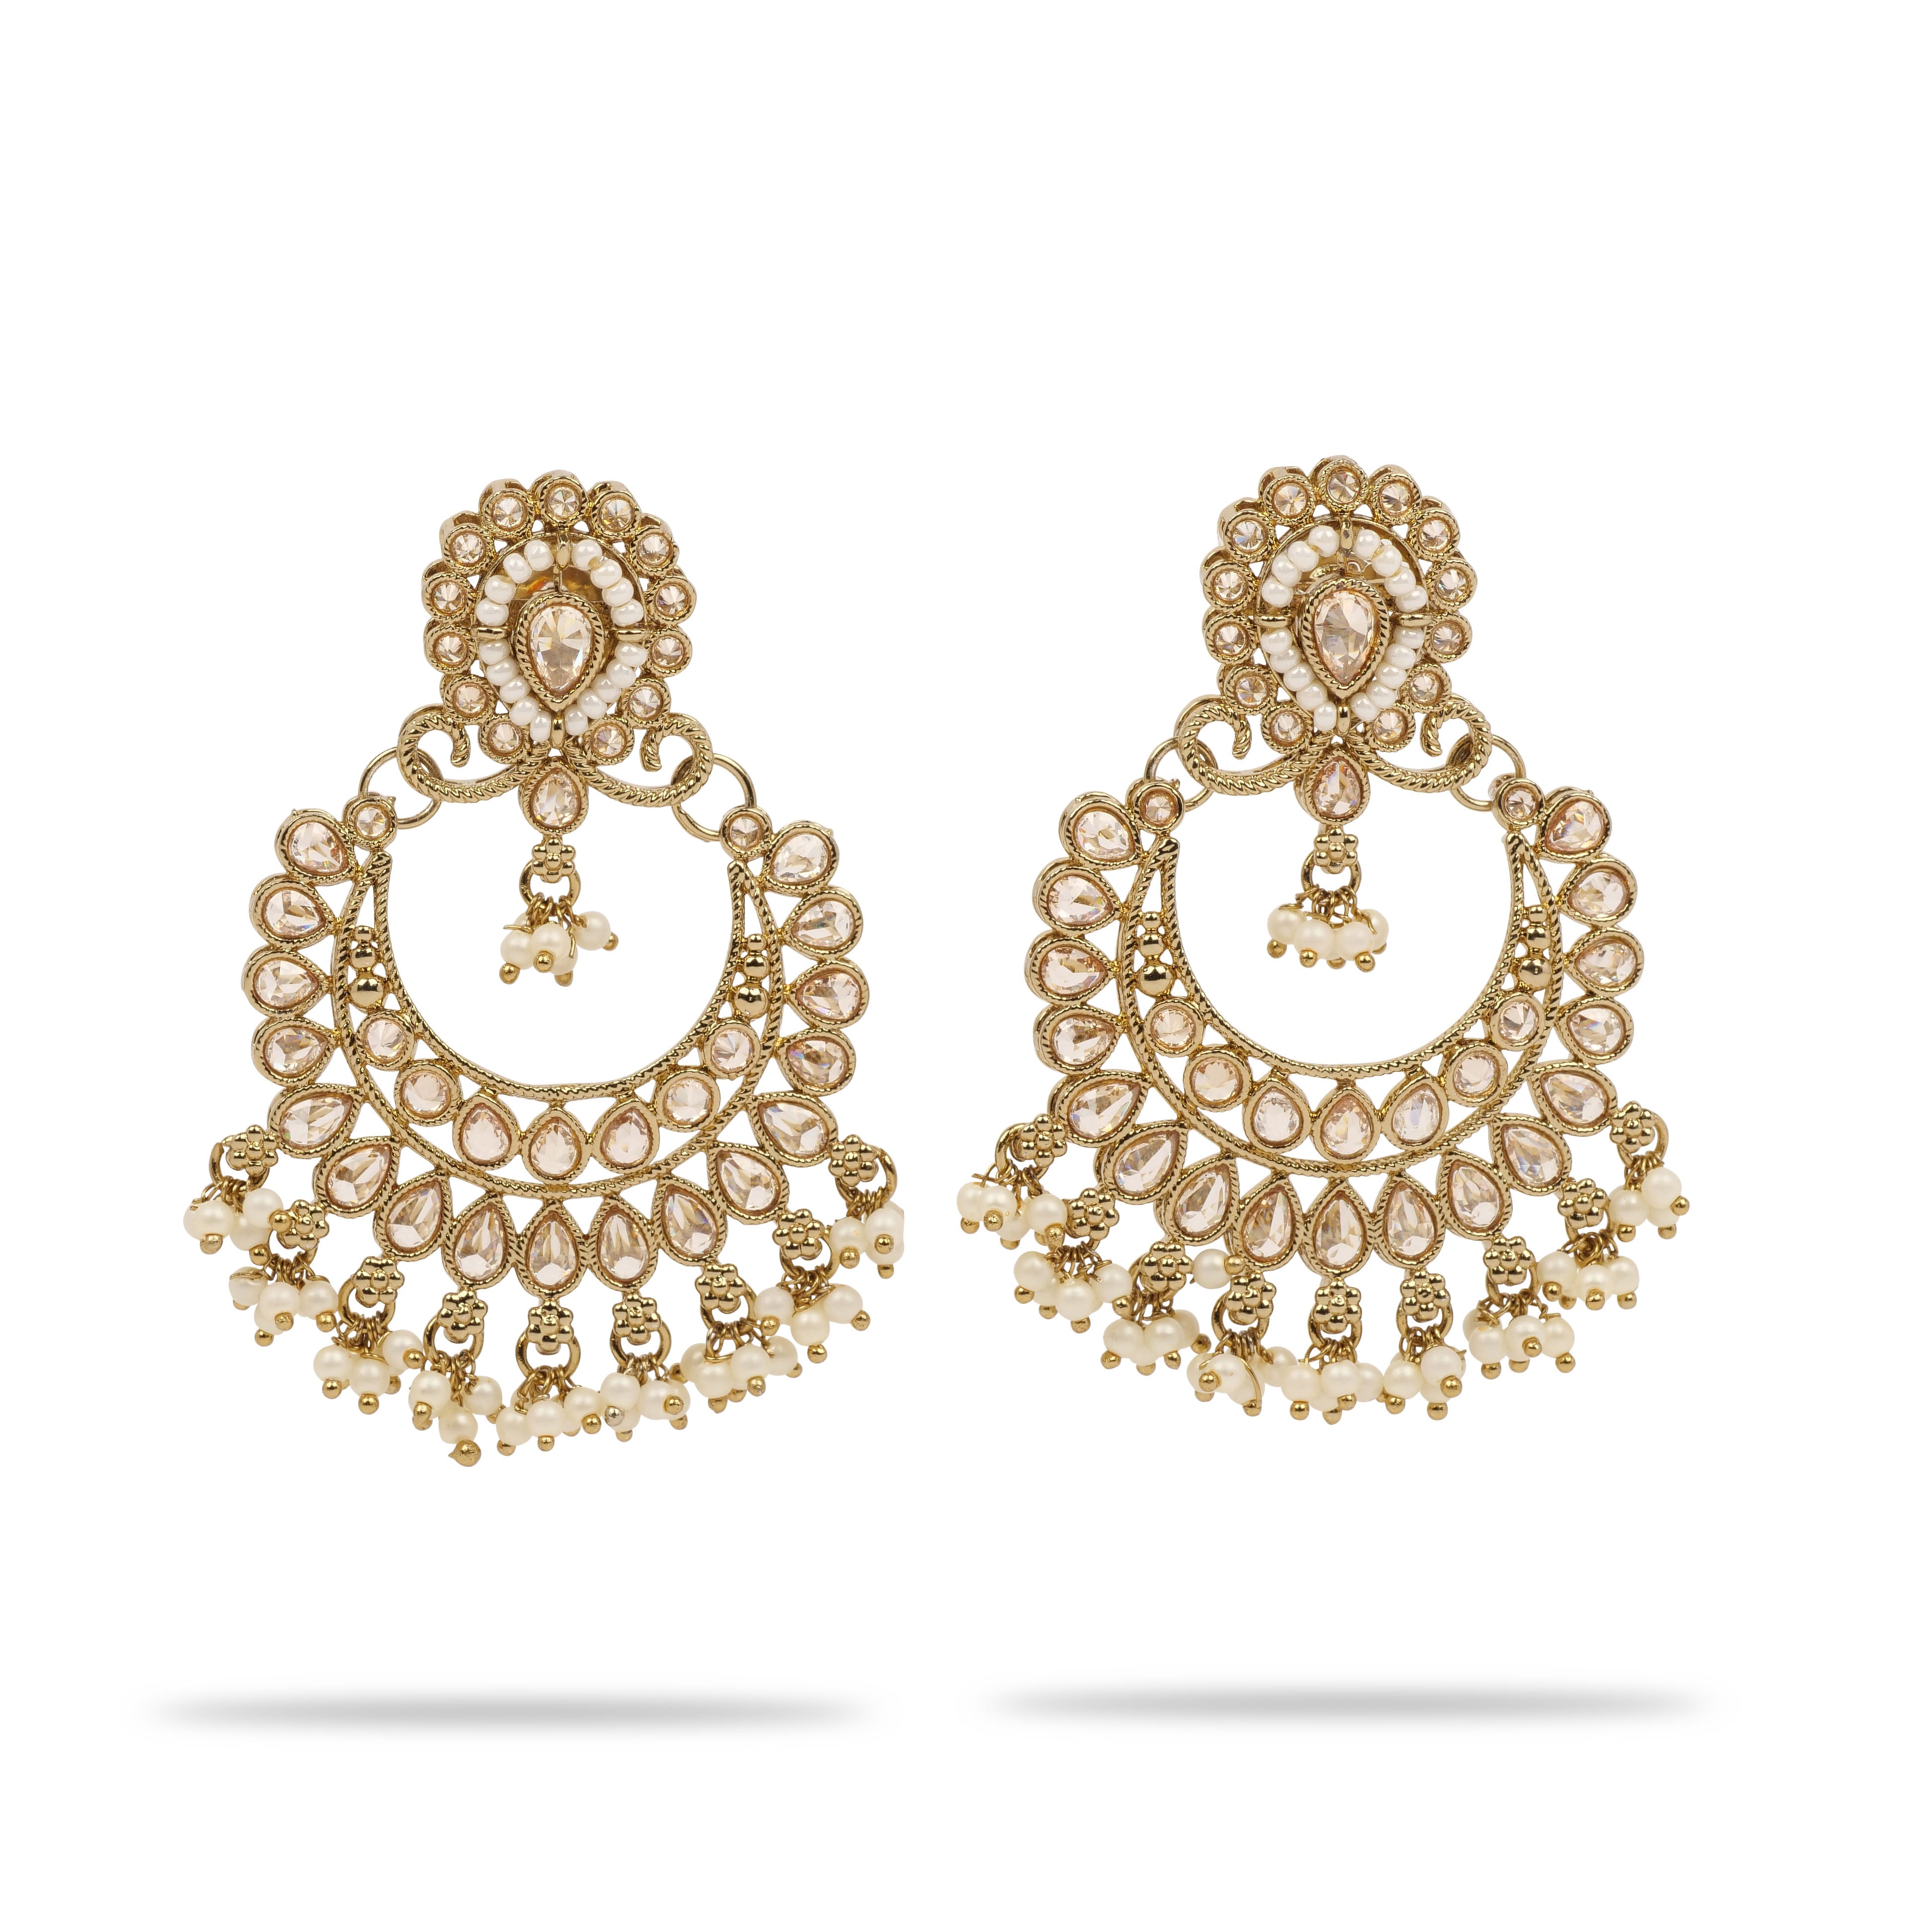 Raahi Pearl Chandbali Earrings in Antique Gold